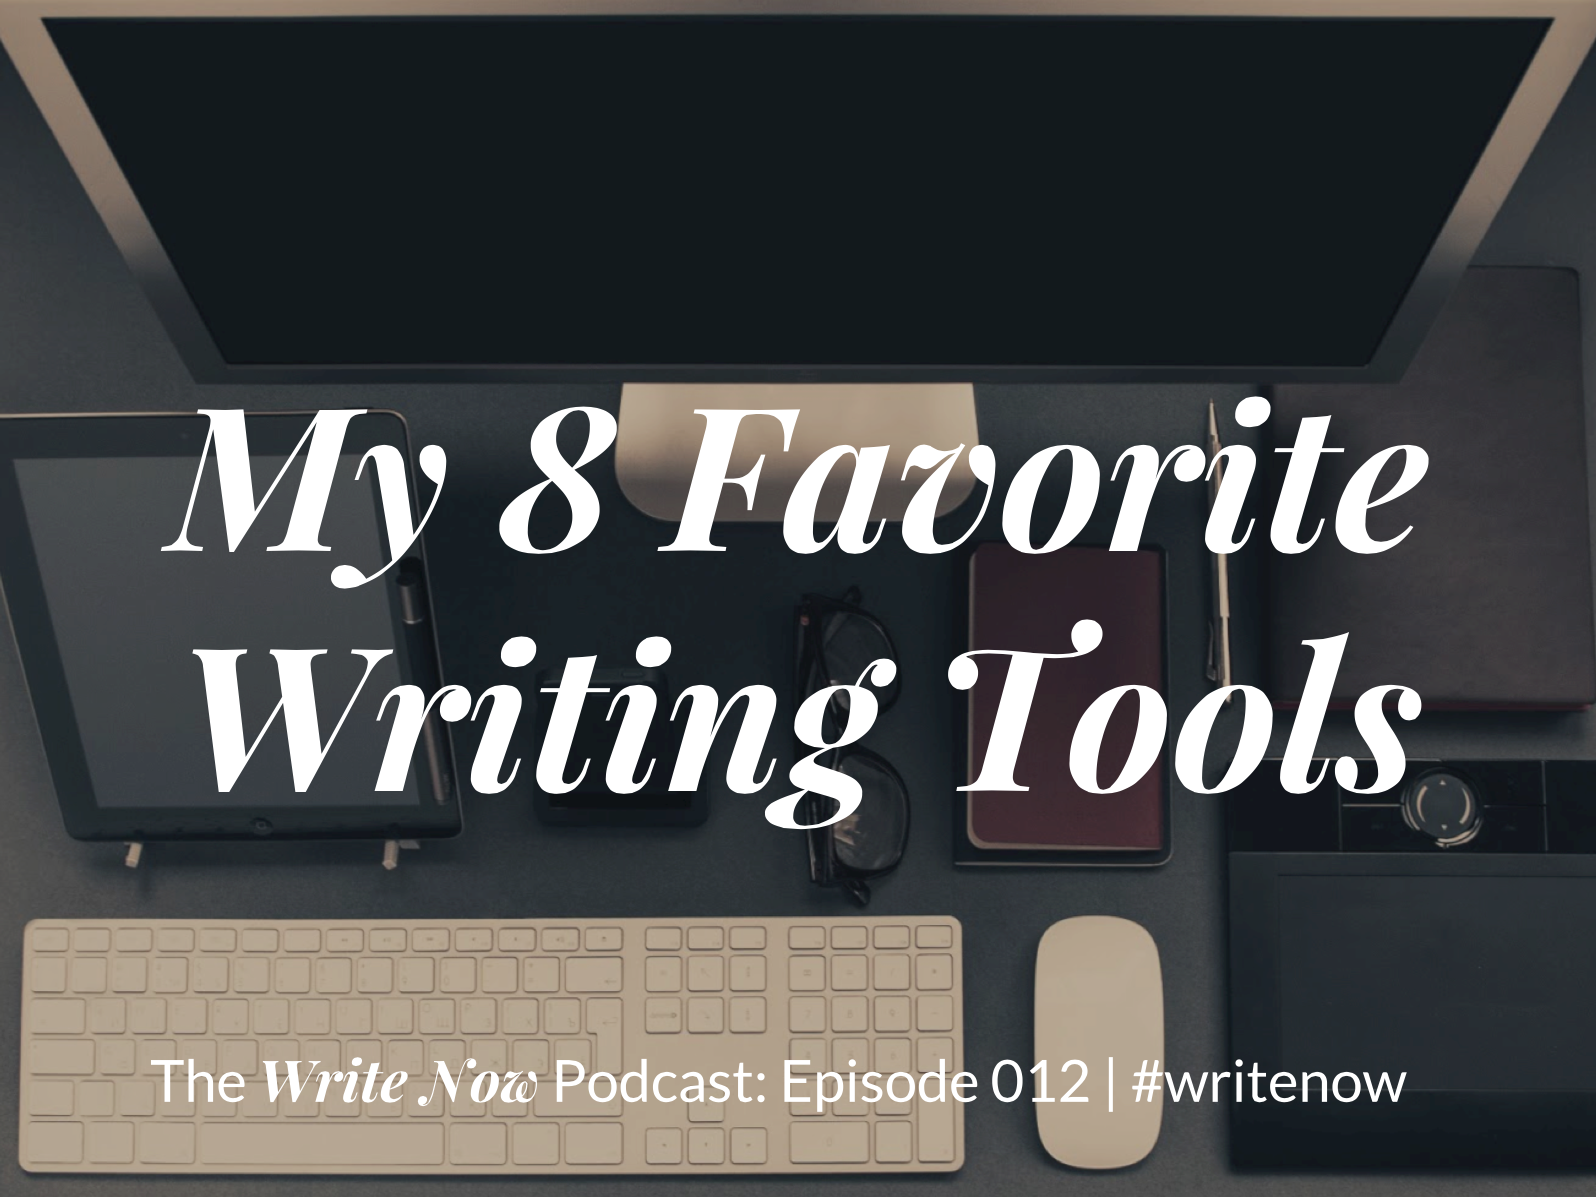 My 8 Favorite Writing Tools – WN 012